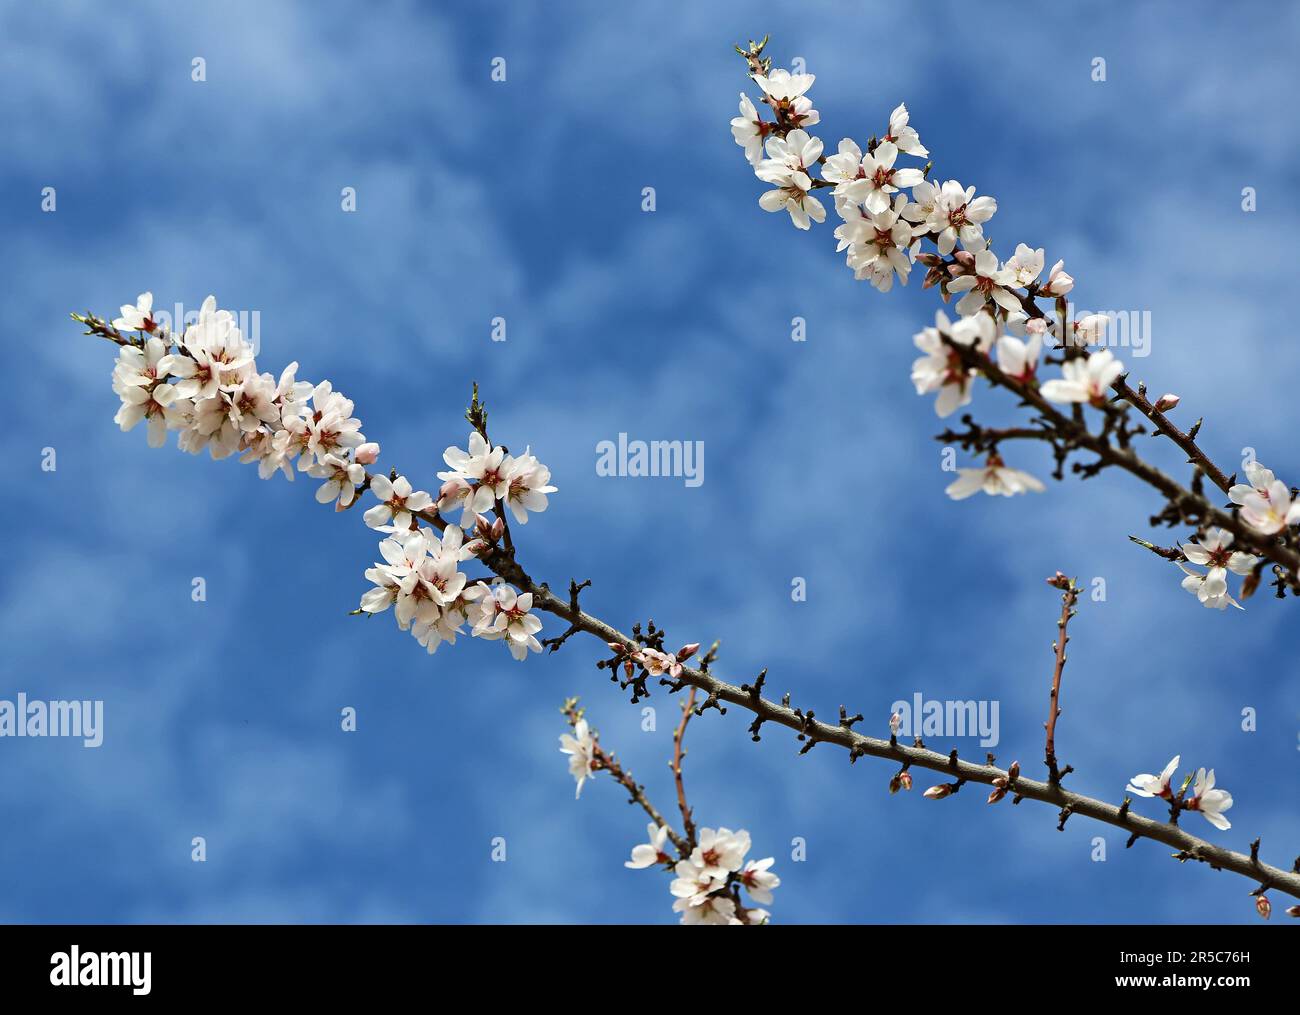 Almond blossom on blue sky Stock Photo